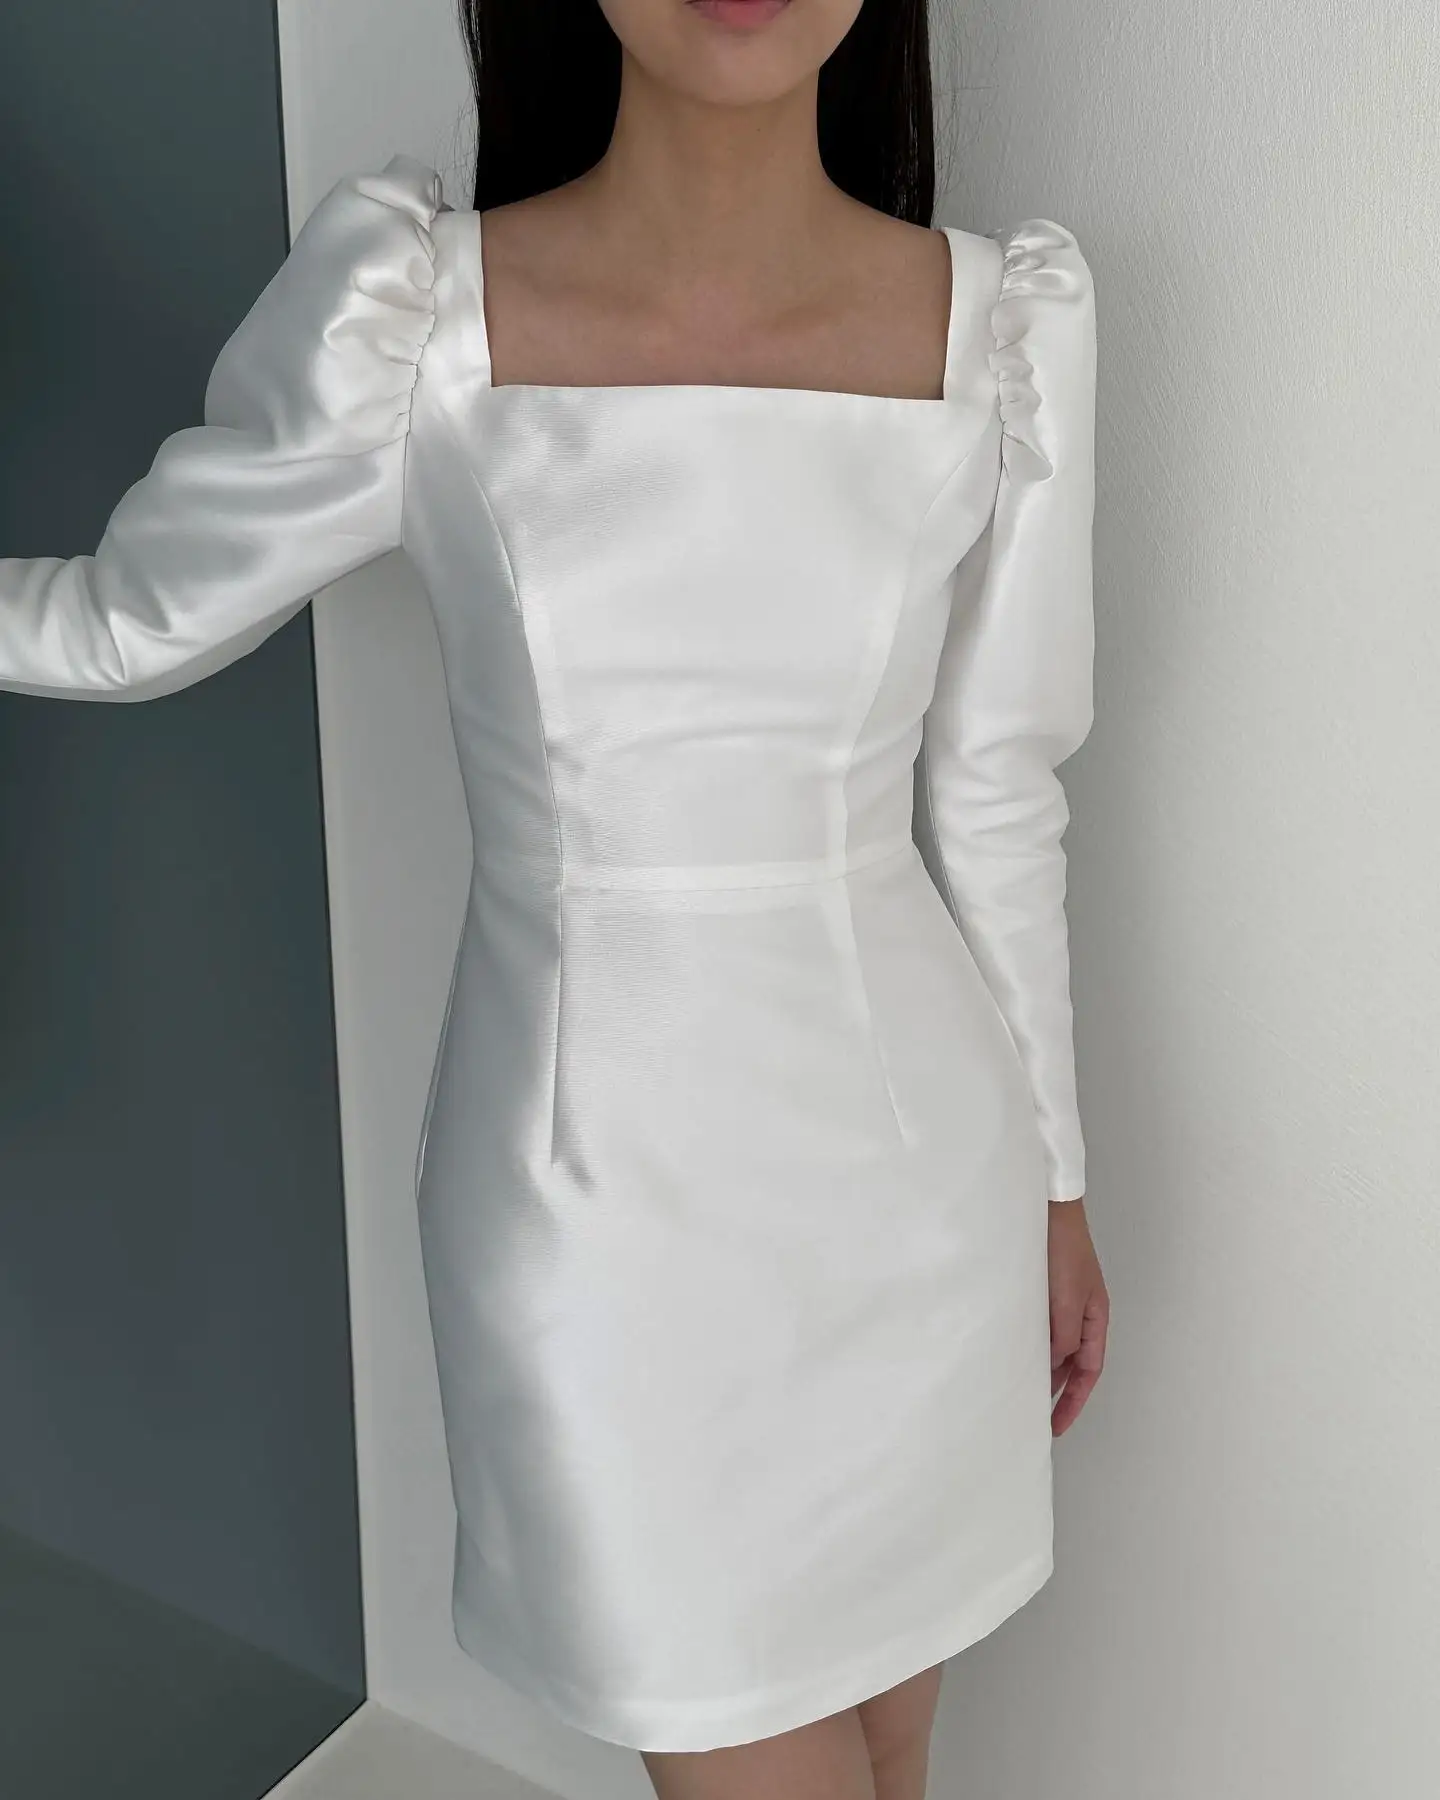 OEING Square Collar Korea Garden Evening Dress White Long Sleeves Formal 프롬드레스 Knee Length Elegant Prom Growns Party Women Bride